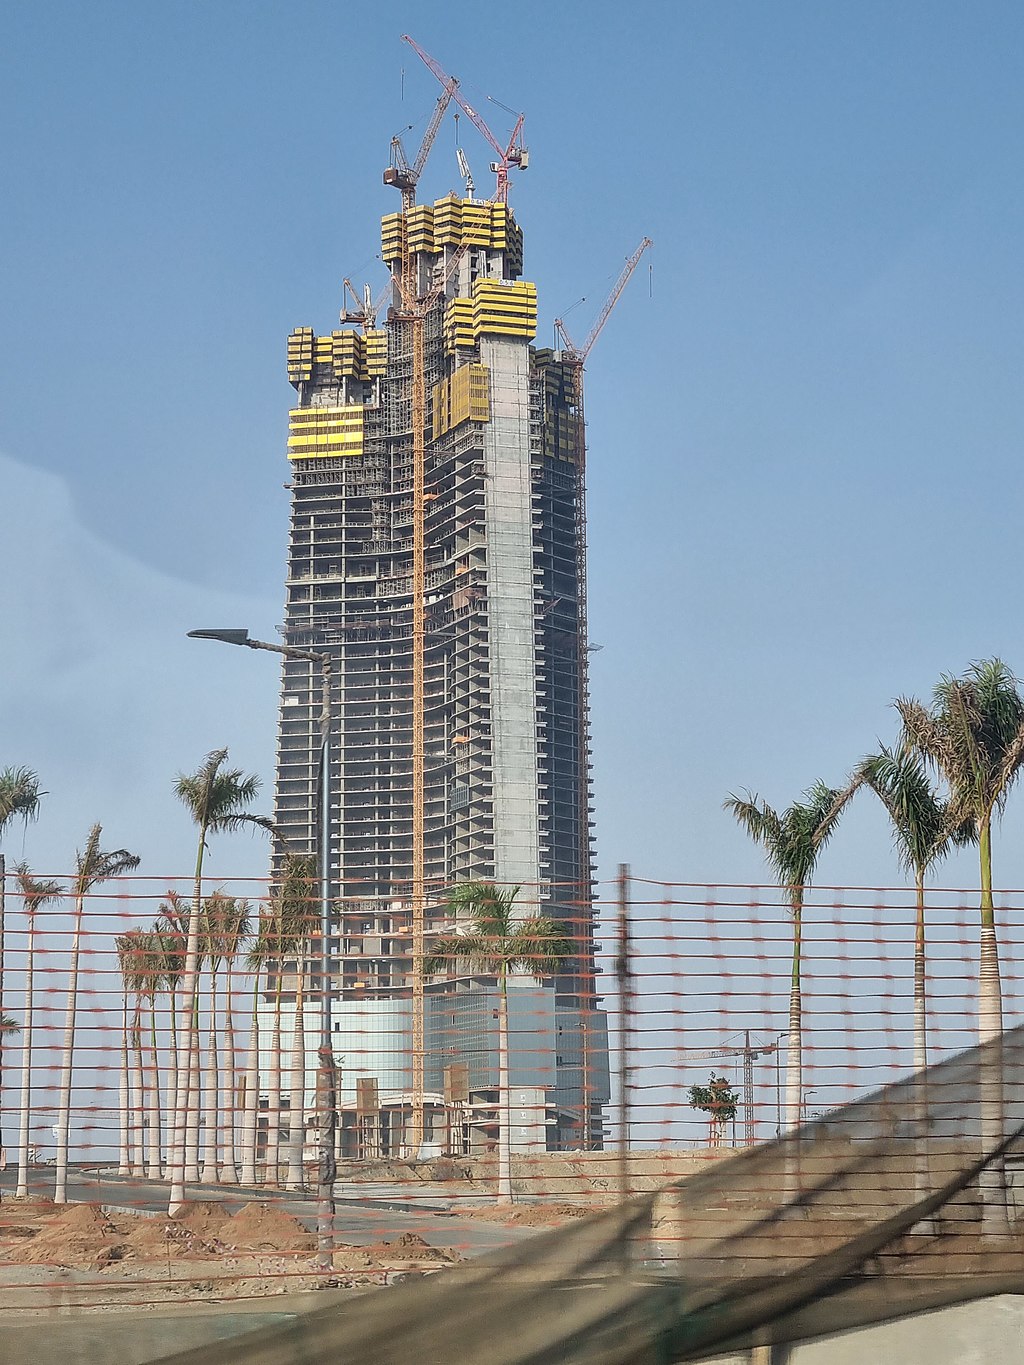 construction restarts on world's tallest skyscraper